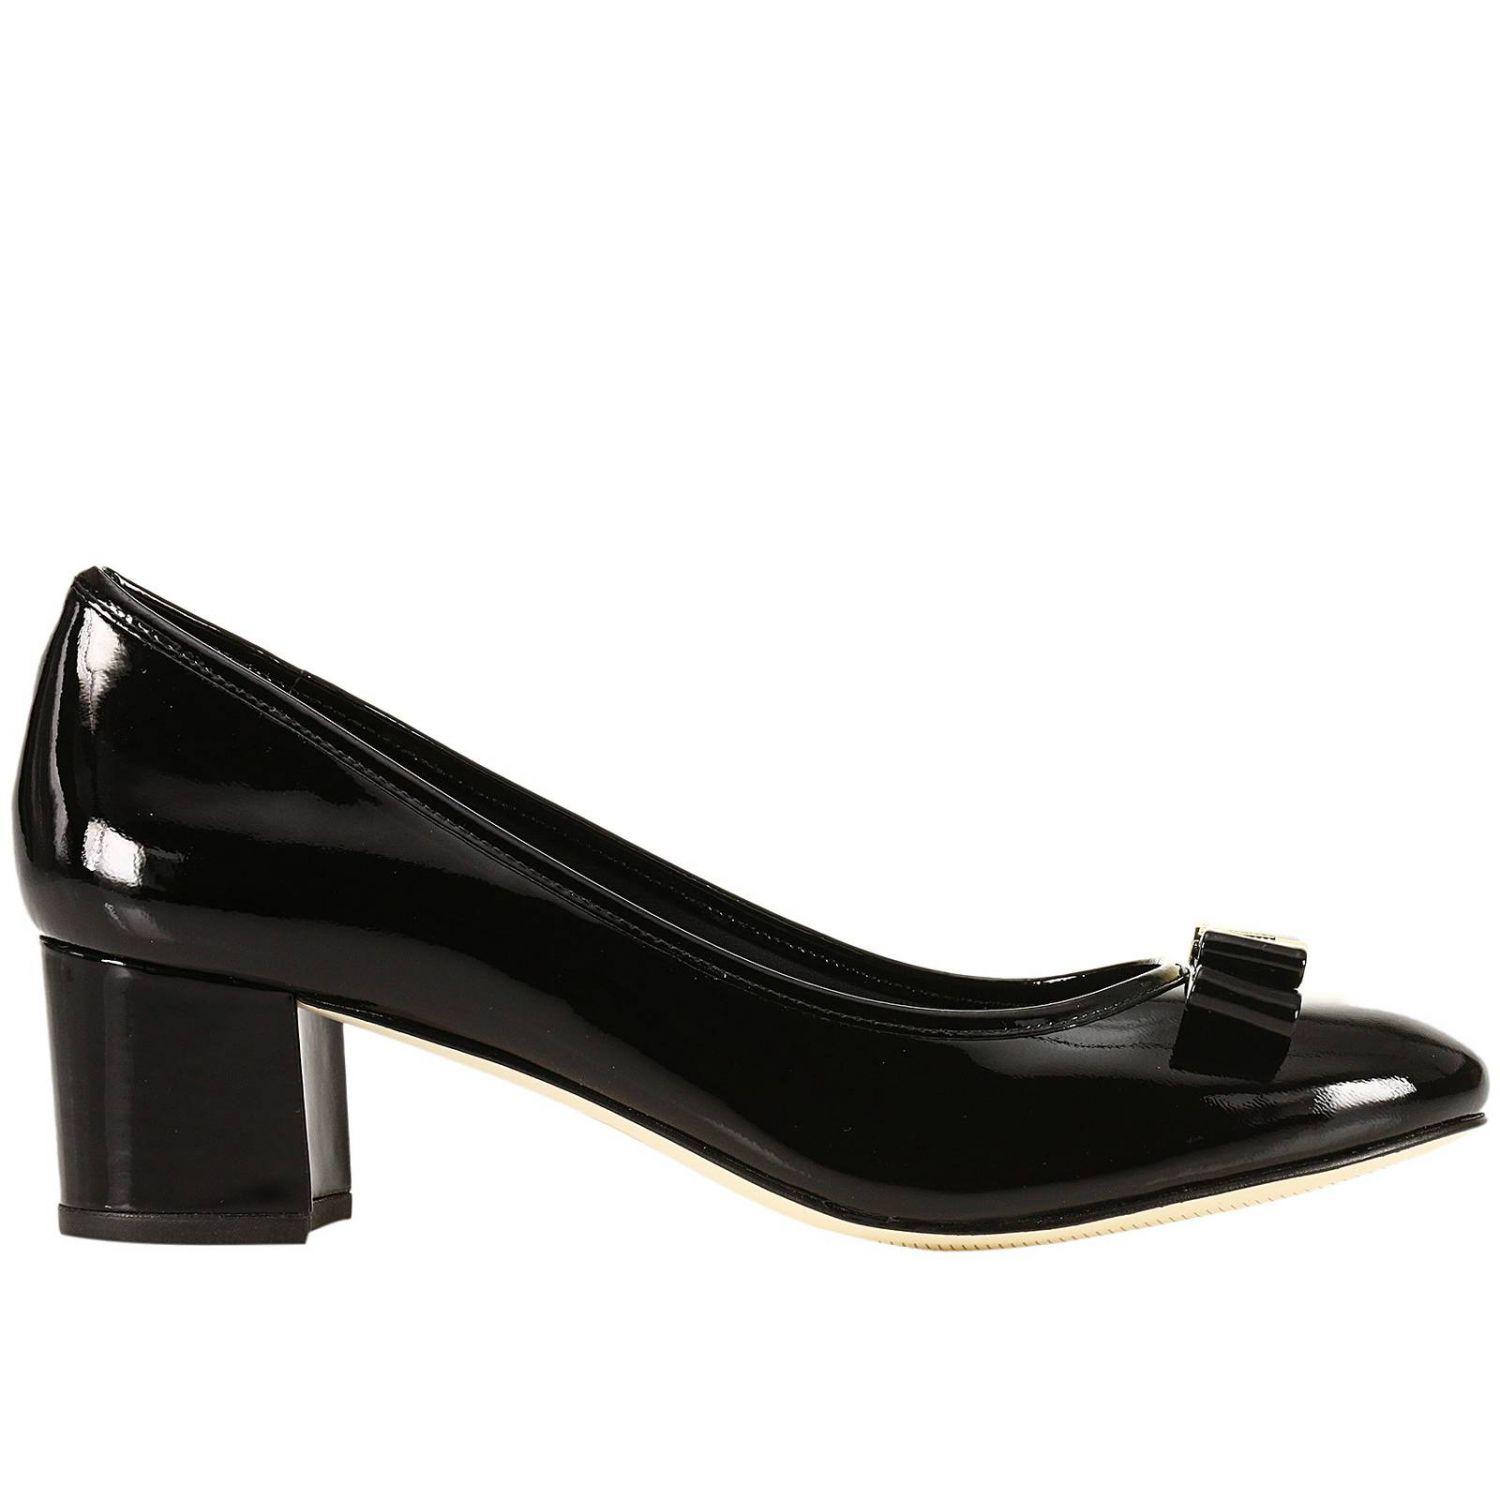 Lyst - Michael Michael Kors Shoes Women in Black